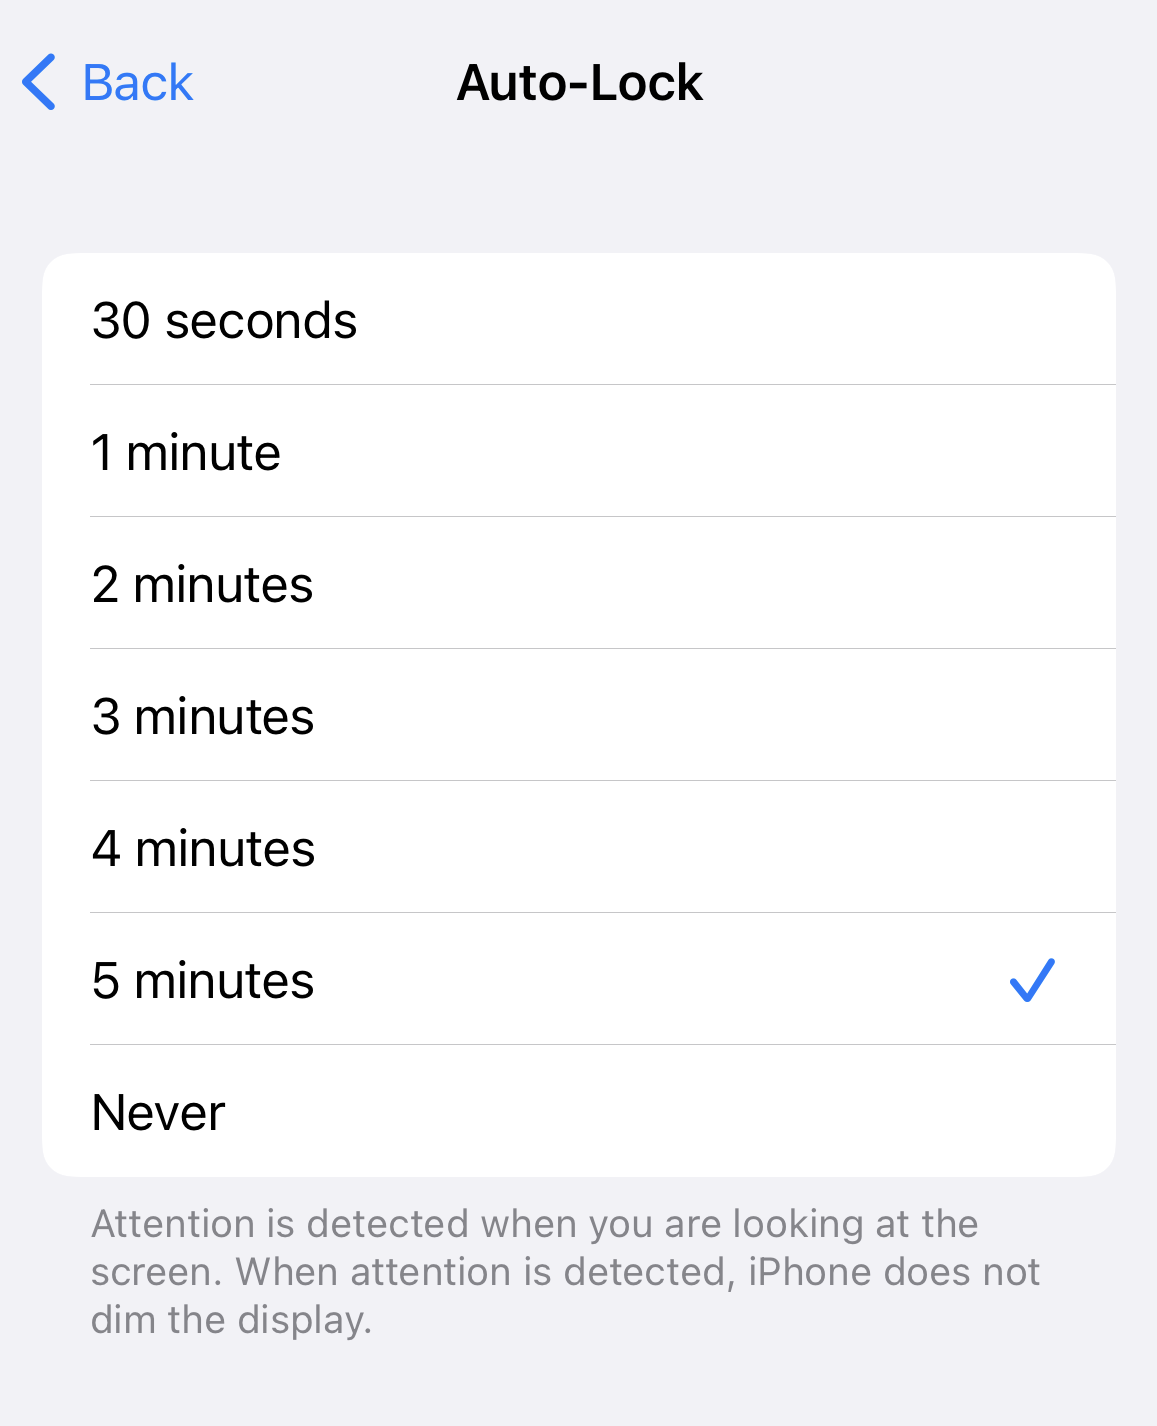 Apple iOS device auto lock settings